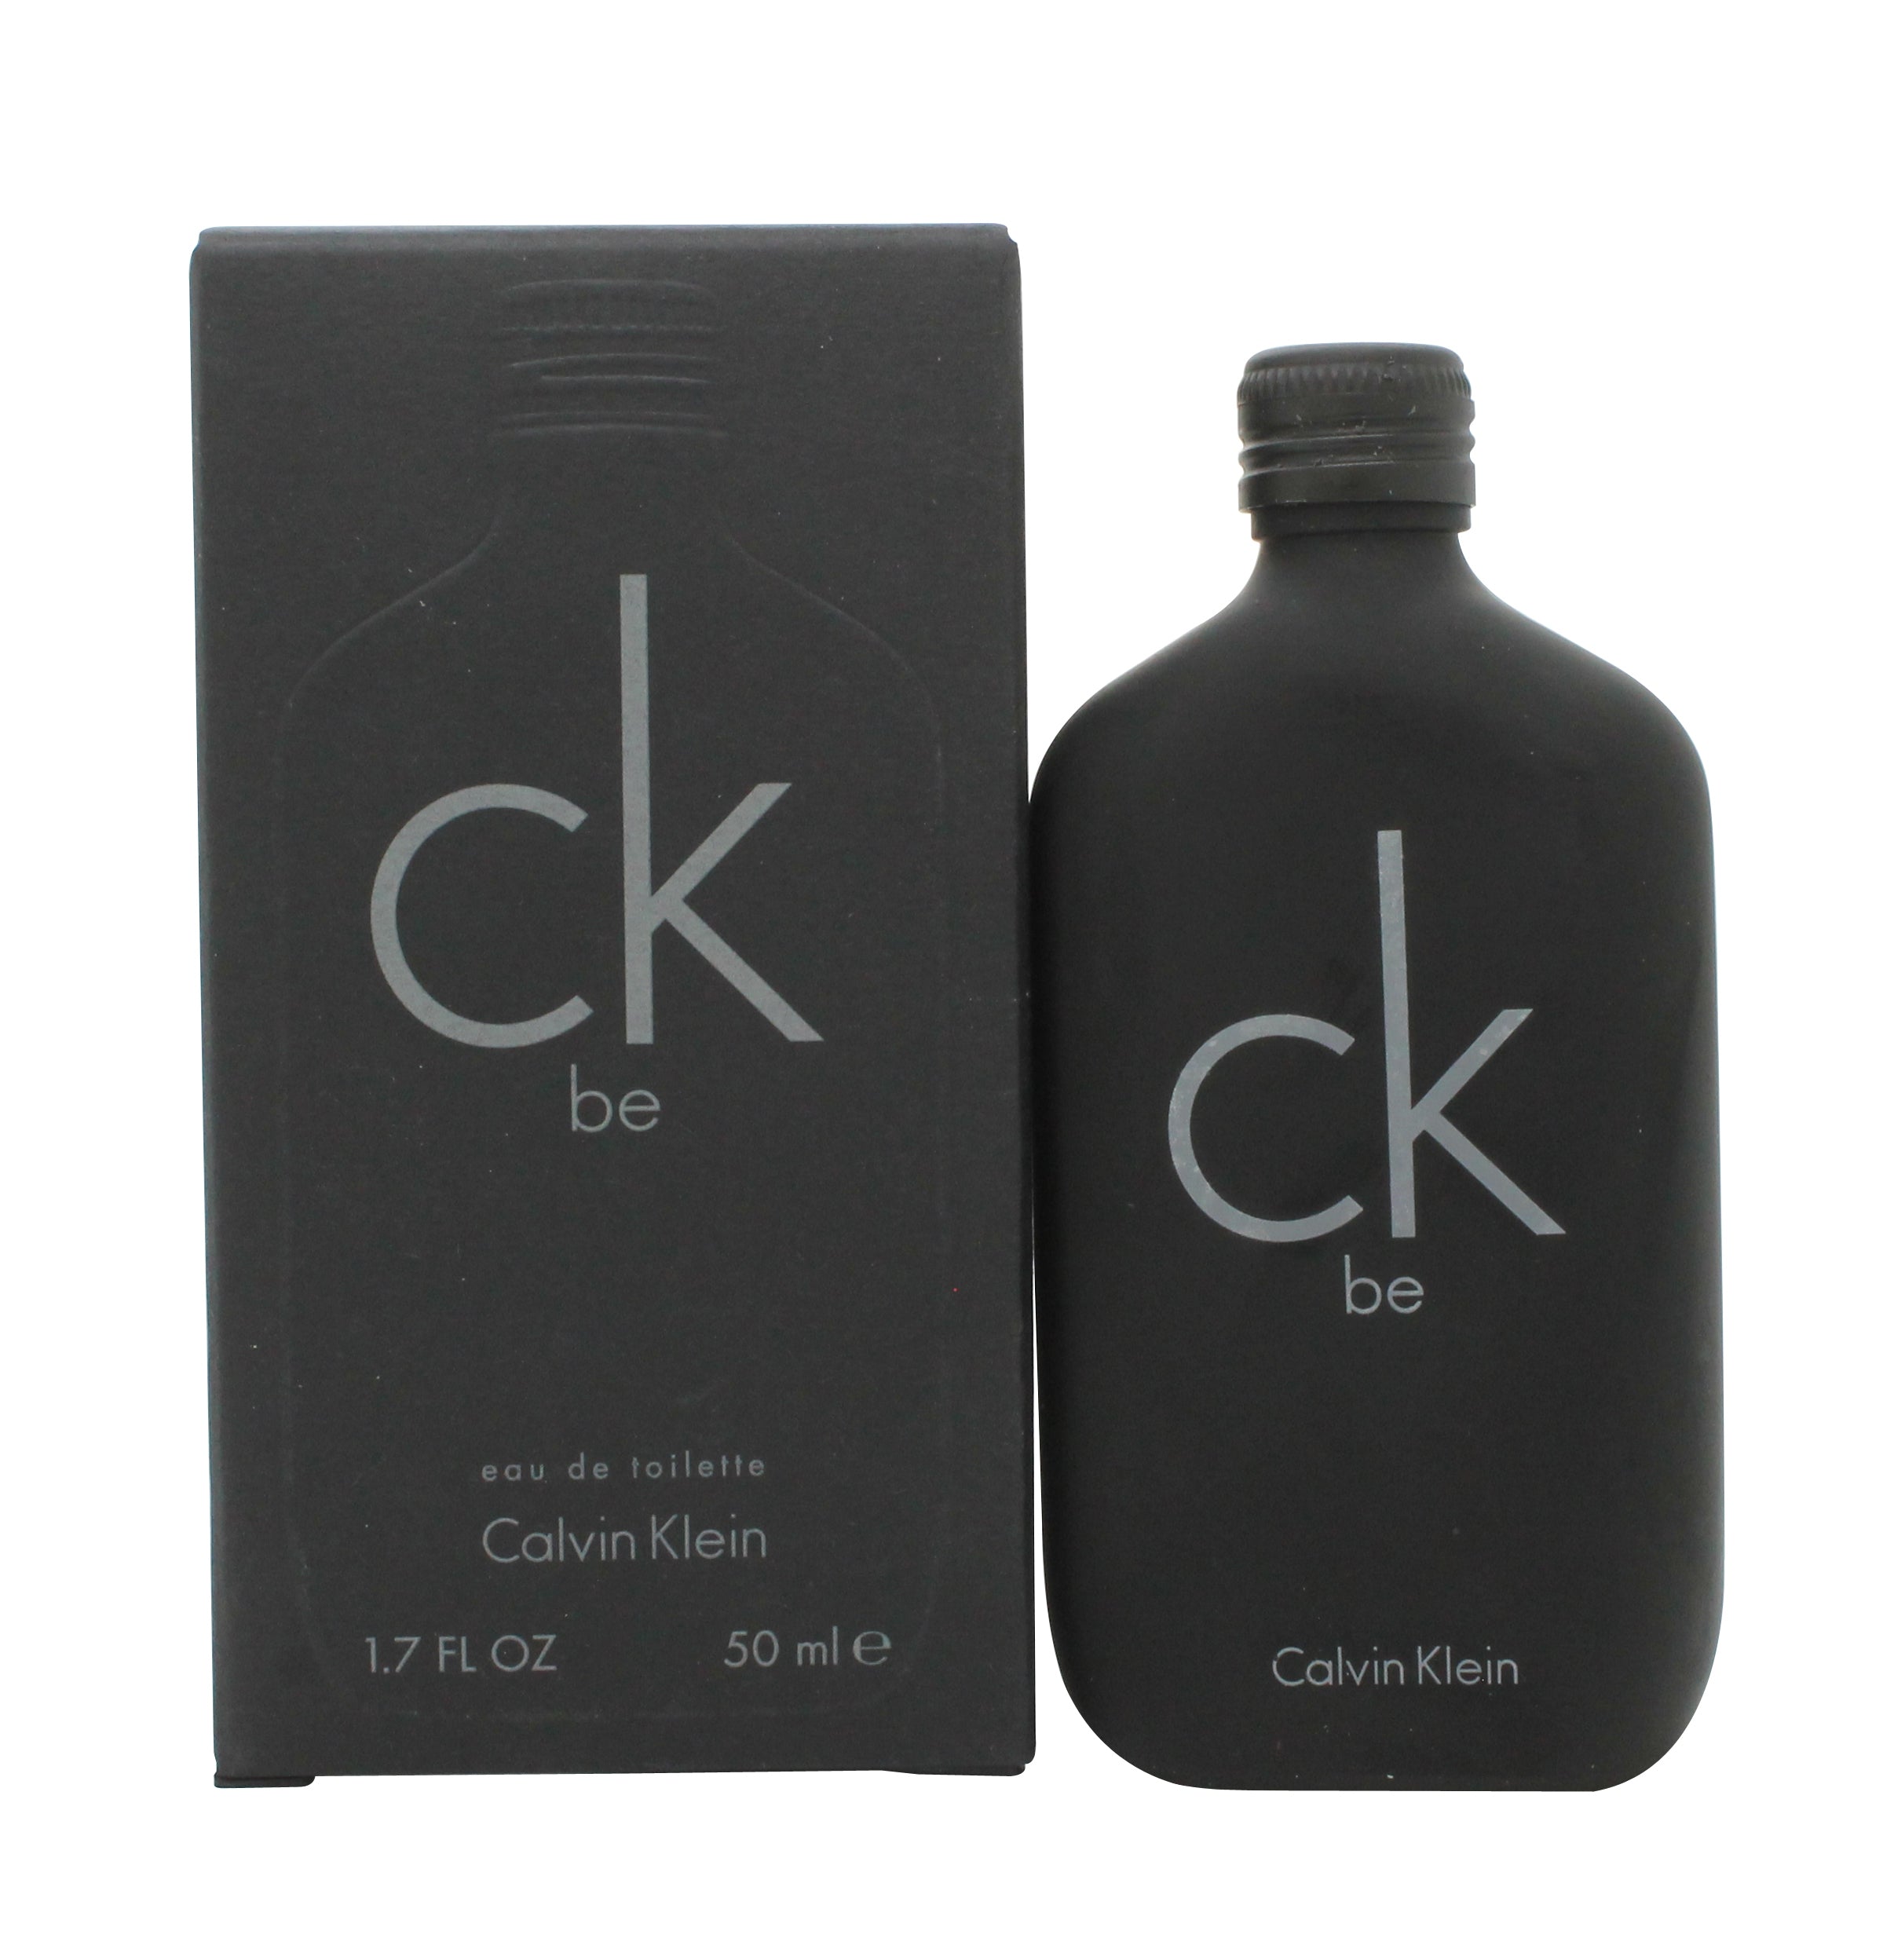 View Calvin Klein CK Be Eau De Toilette 50ml Spray information